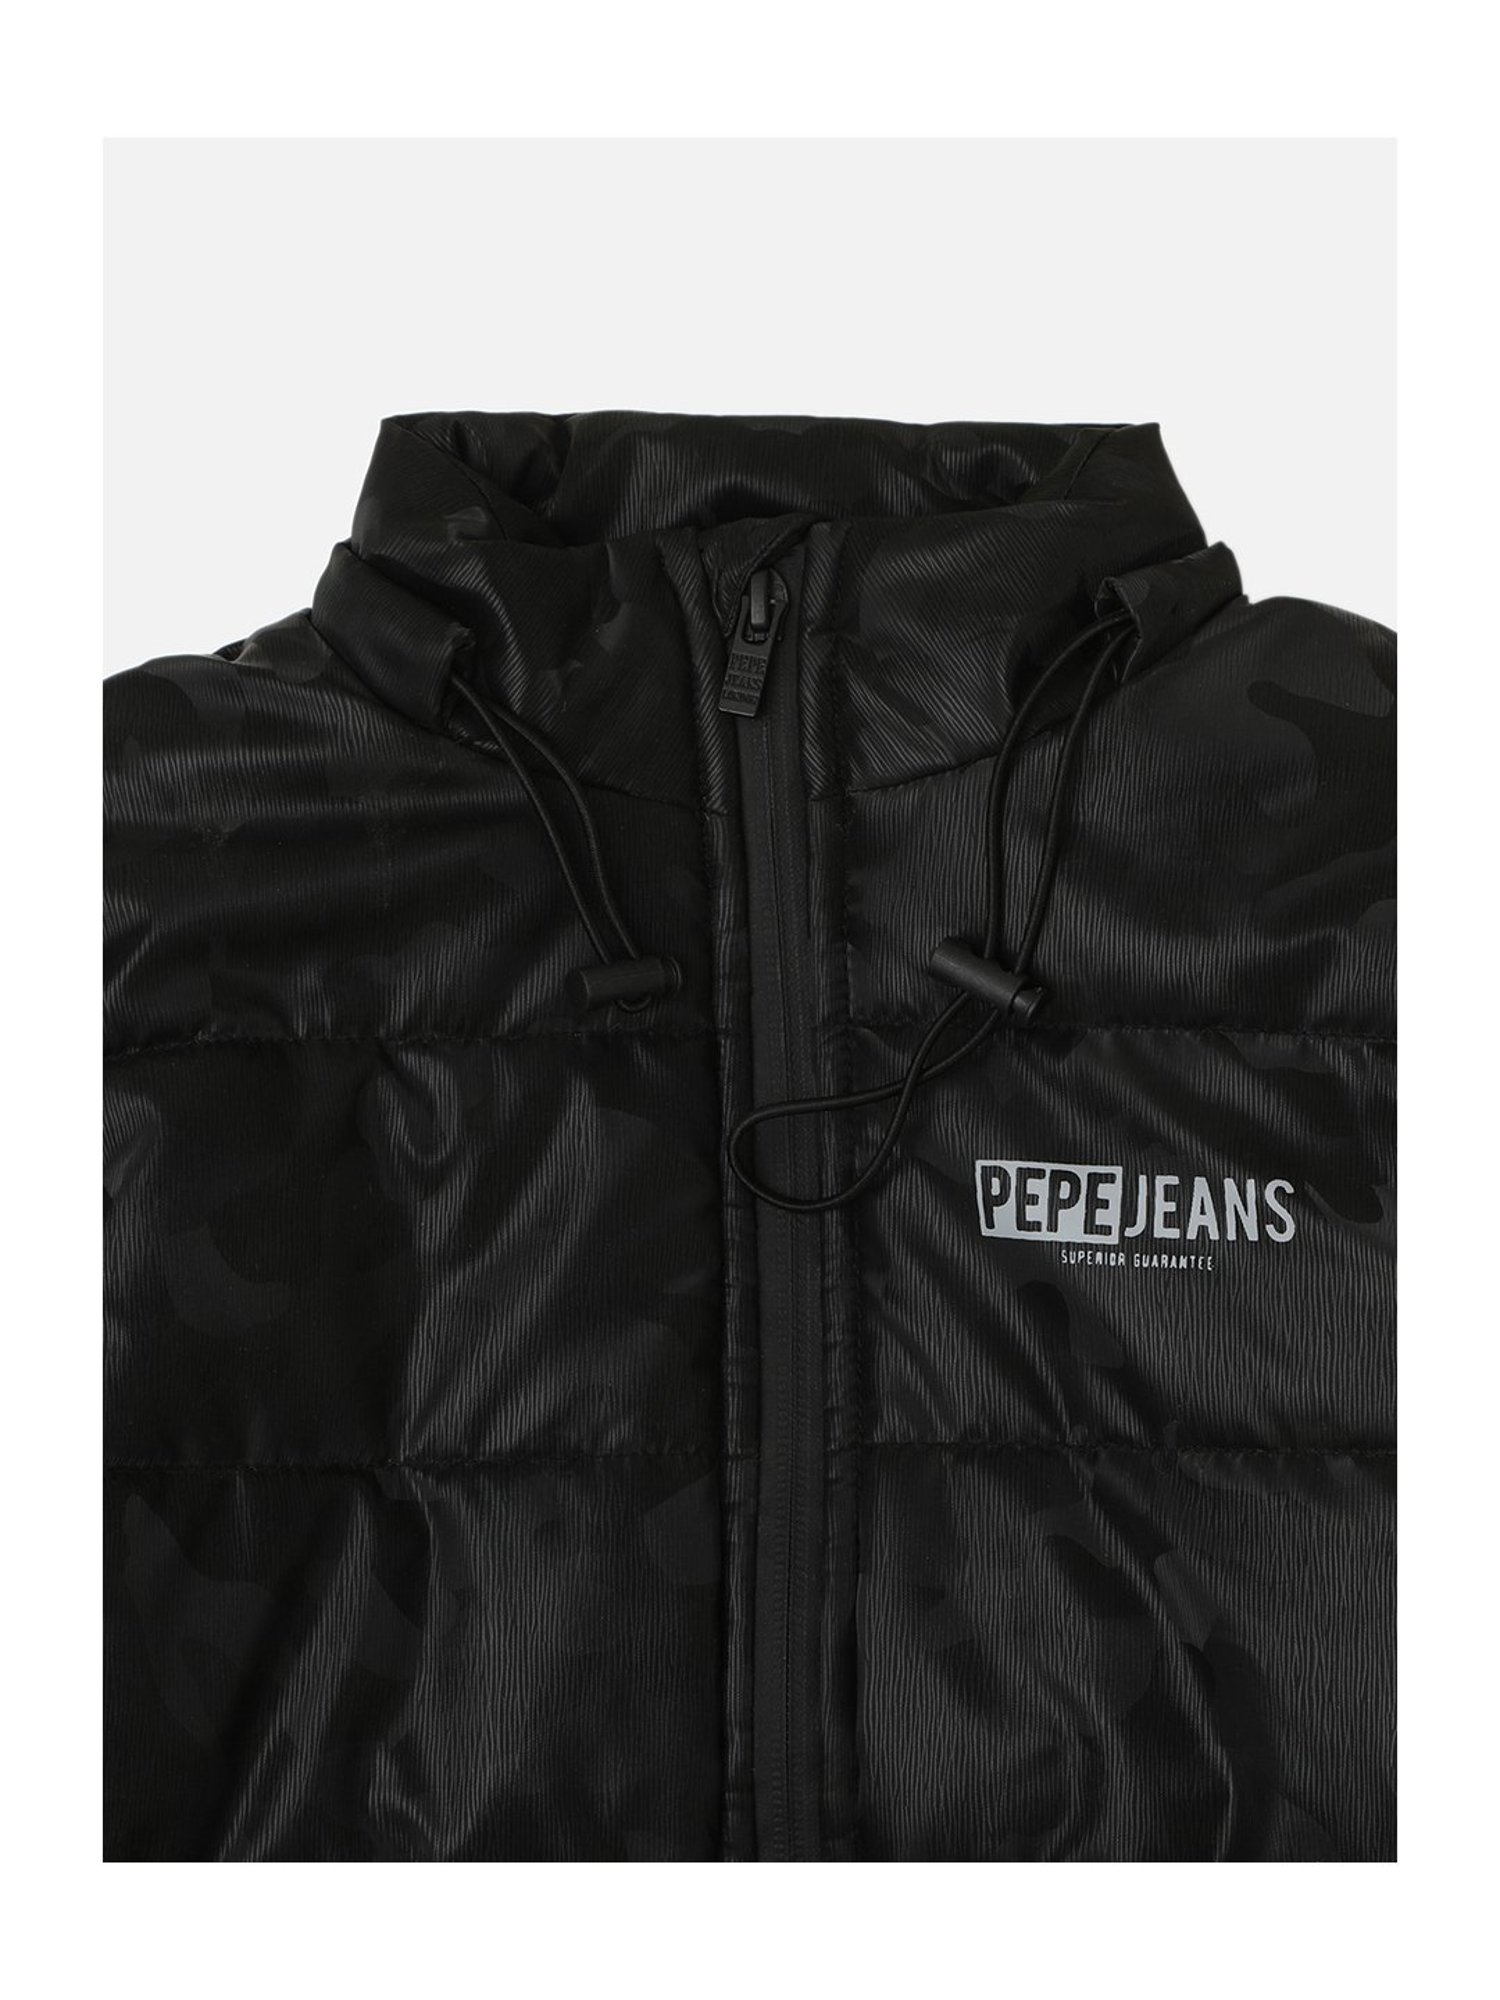 Pepe jeans Megan Leather Jacket Black | Dressinn